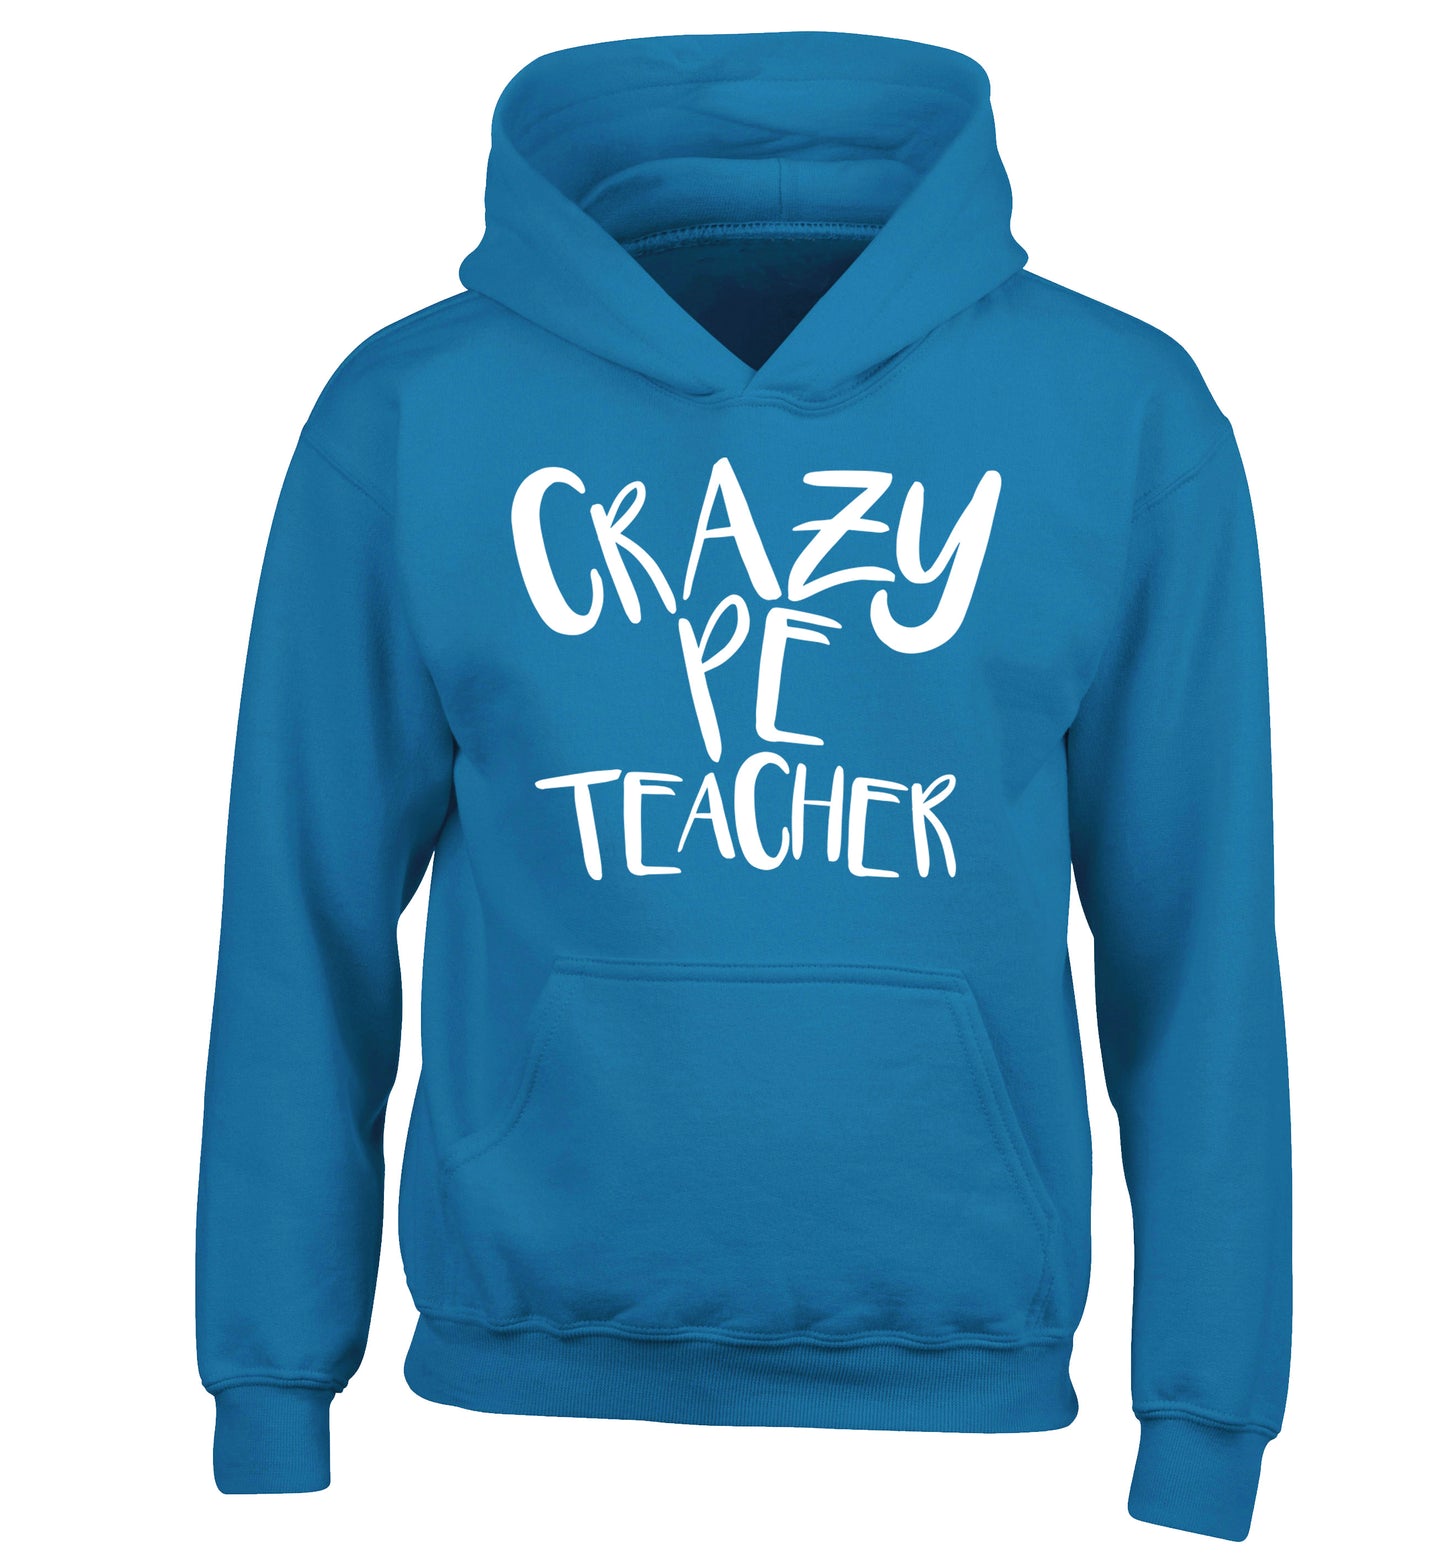 Crazy PE teacher children's blue hoodie 12-13 Years